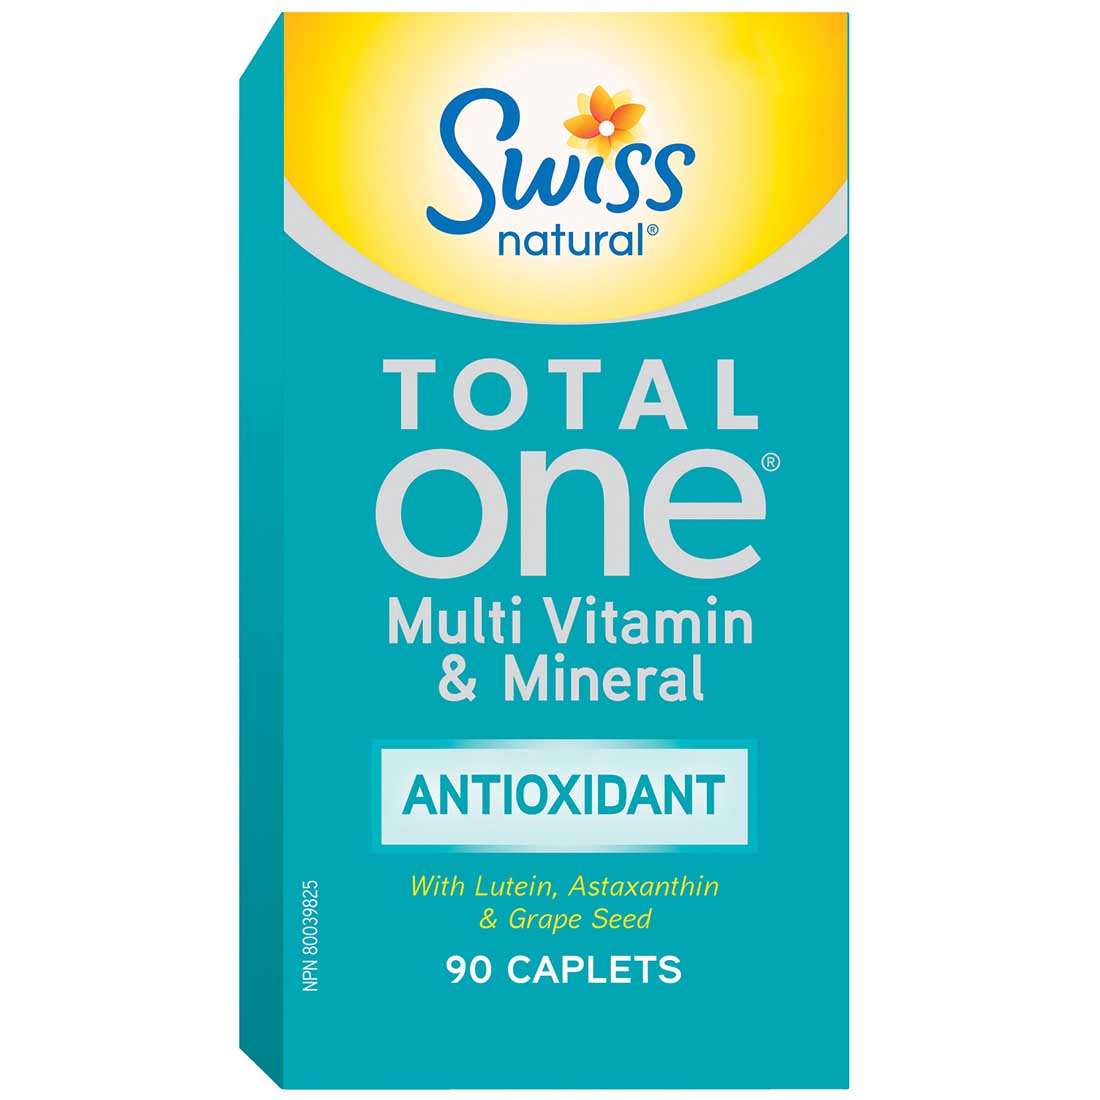 Swiss Natural Total One Multi Vitamin & Mineral Antioxidant, 90 Caplets